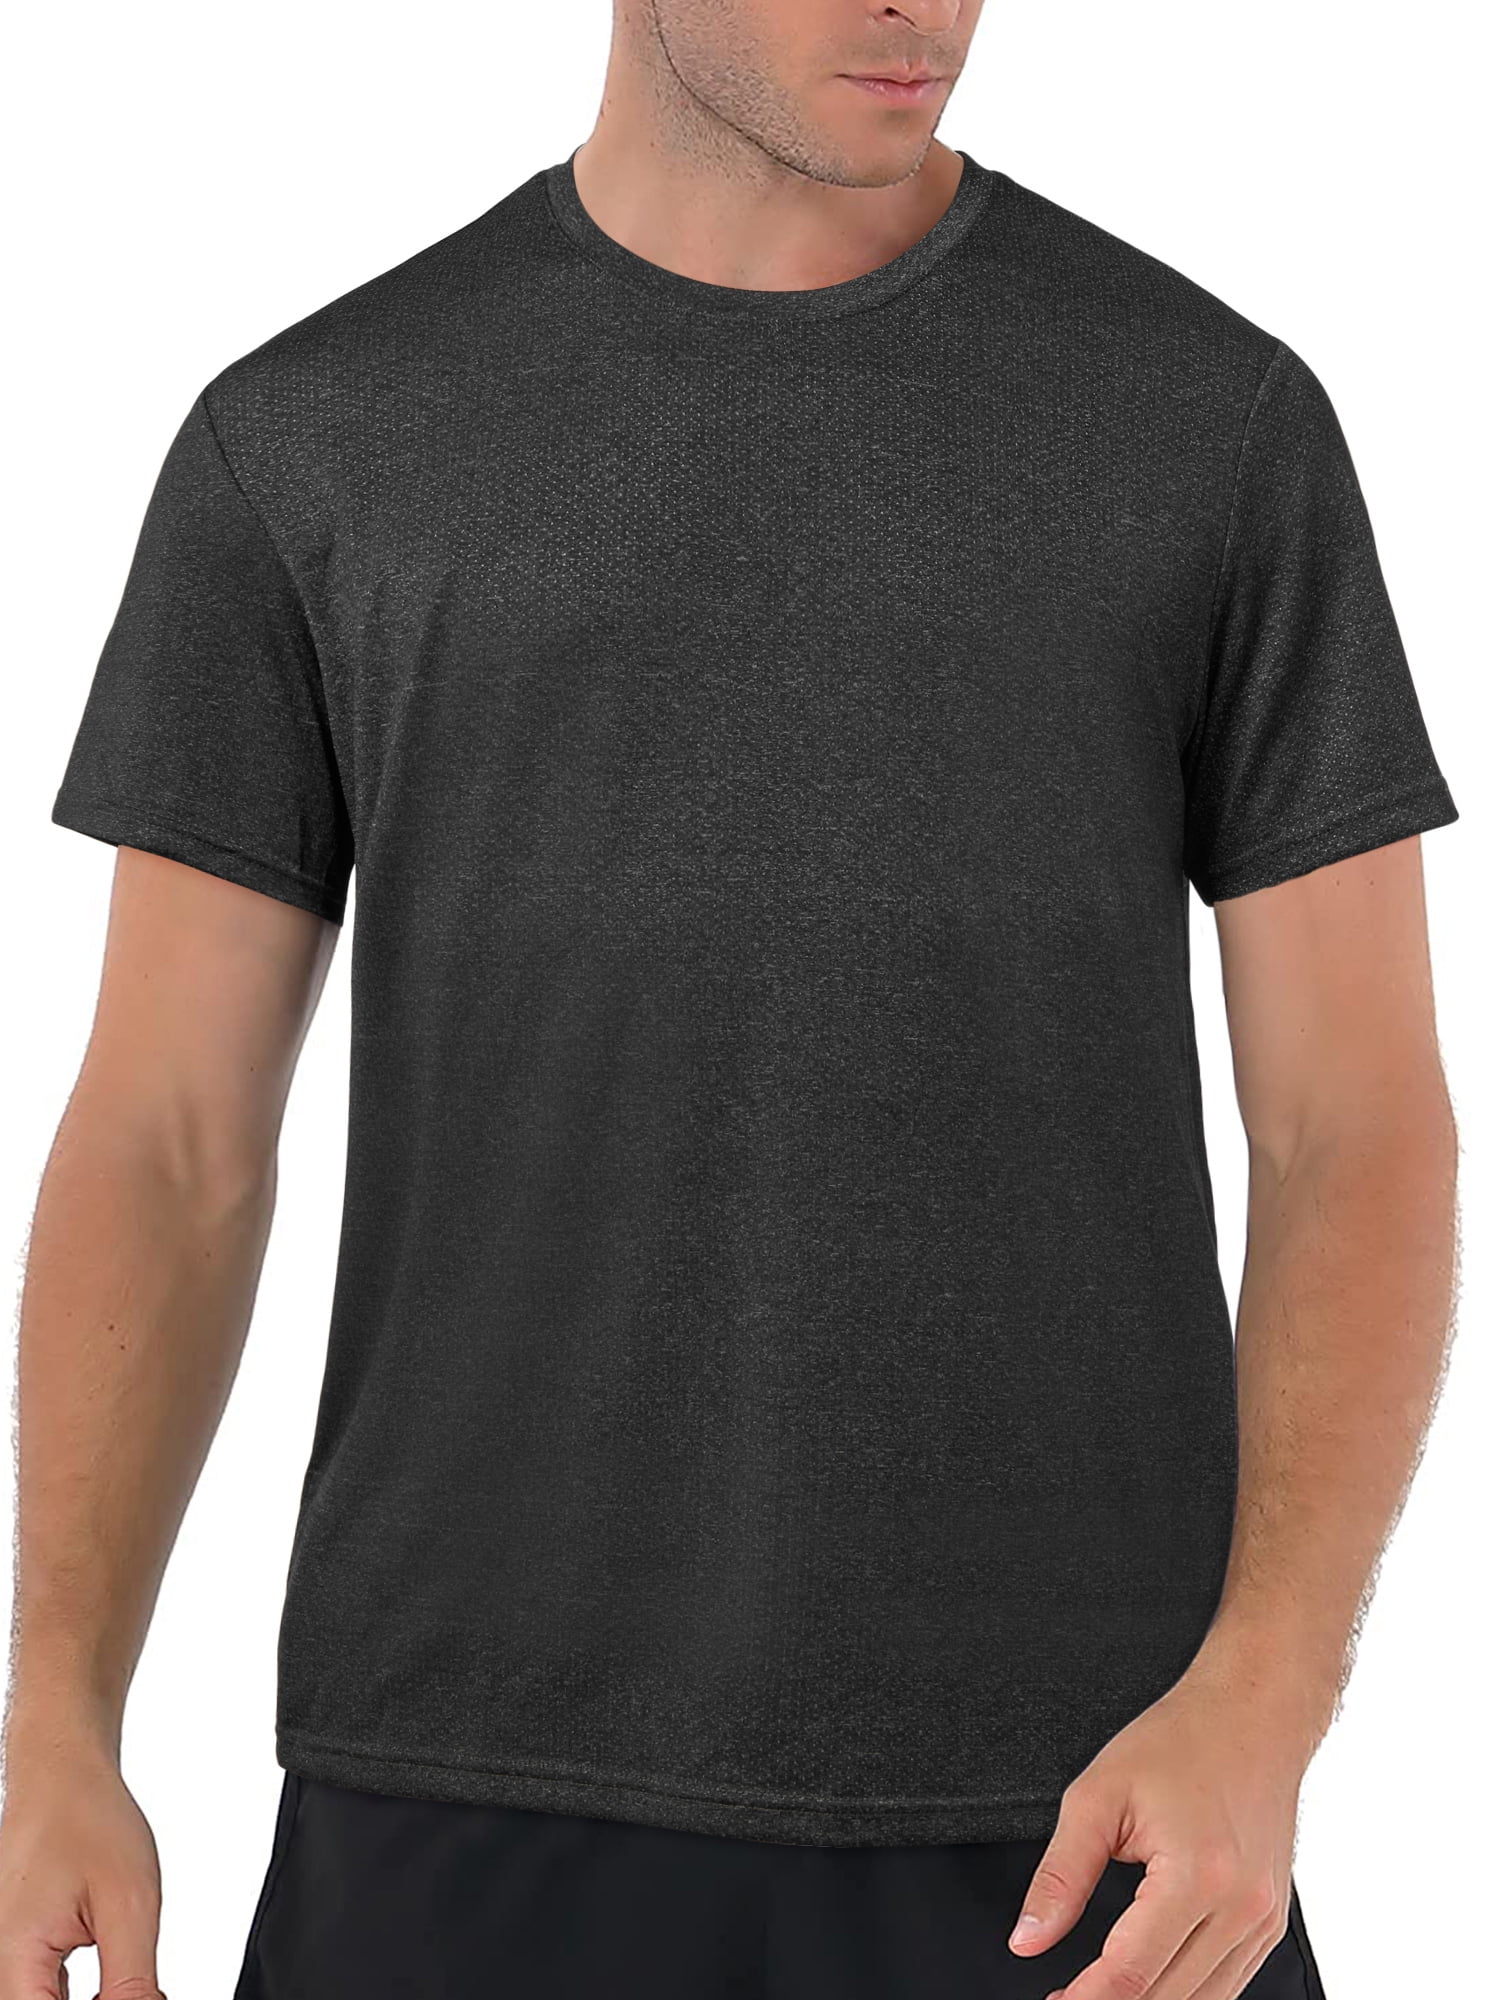 Cool Dry fit T-Shirts CQR Mens UPF 50 Athletic Running Hiking Short Sleeve Shirt UV Sun Protection Outdoor Shirts 